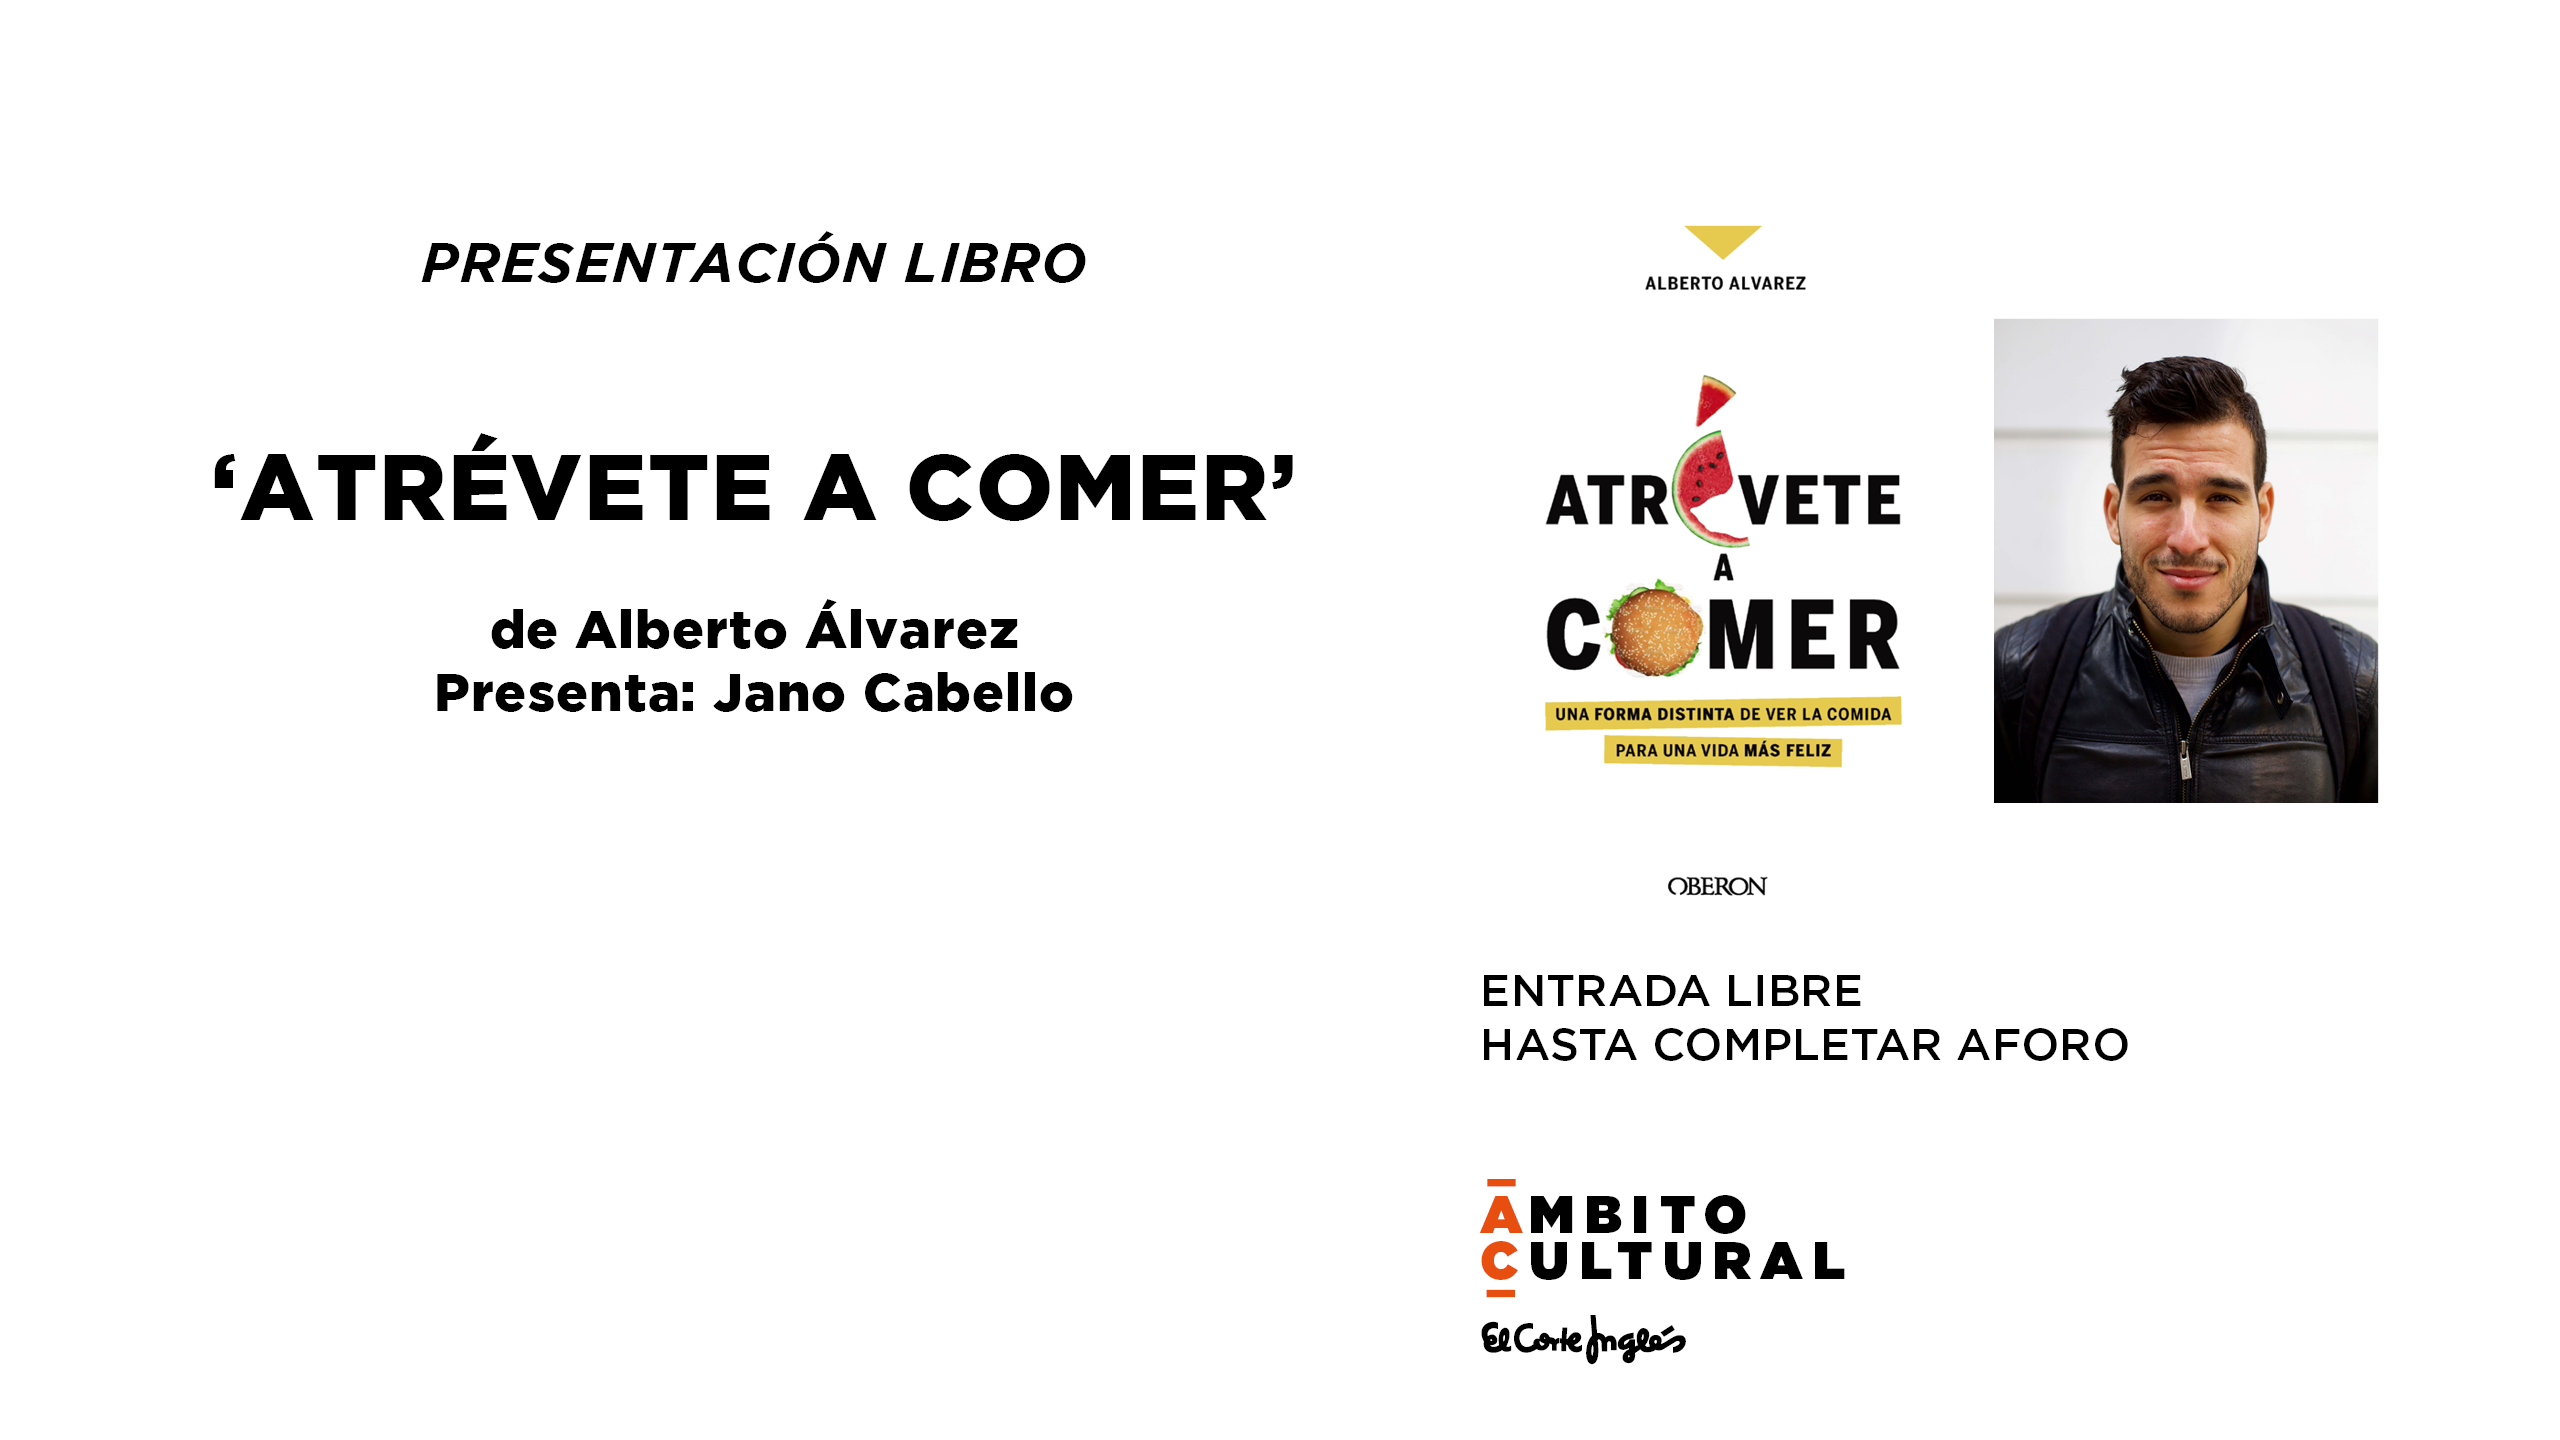 Imagen del evento PRESENTACIÓN LIBRO: 'ATRÉVETE A COMER' DE ALBERTO ÁLVAREZ